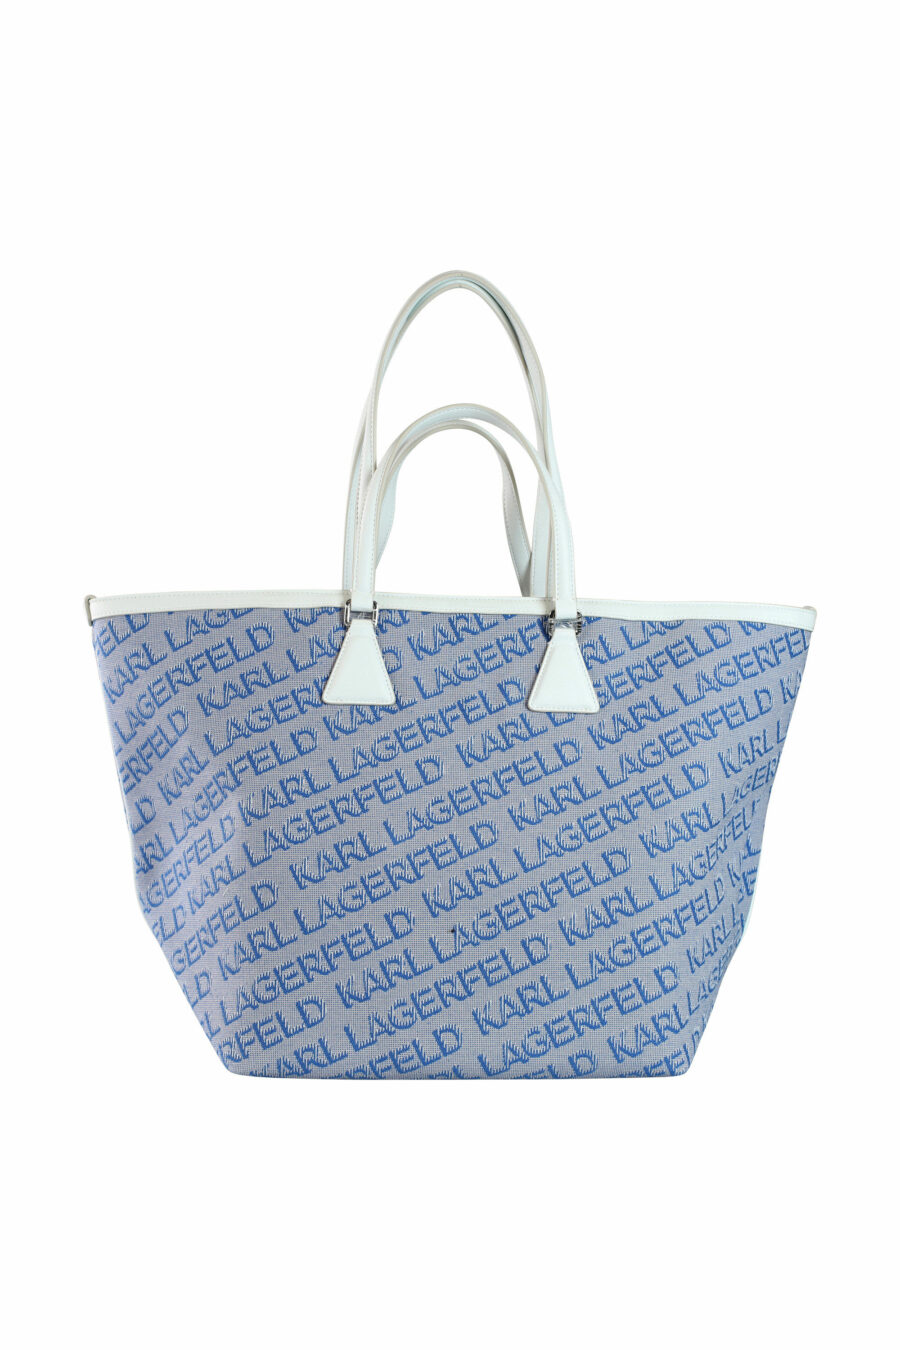 Tote bag blue "all over logo" - 8720744234203